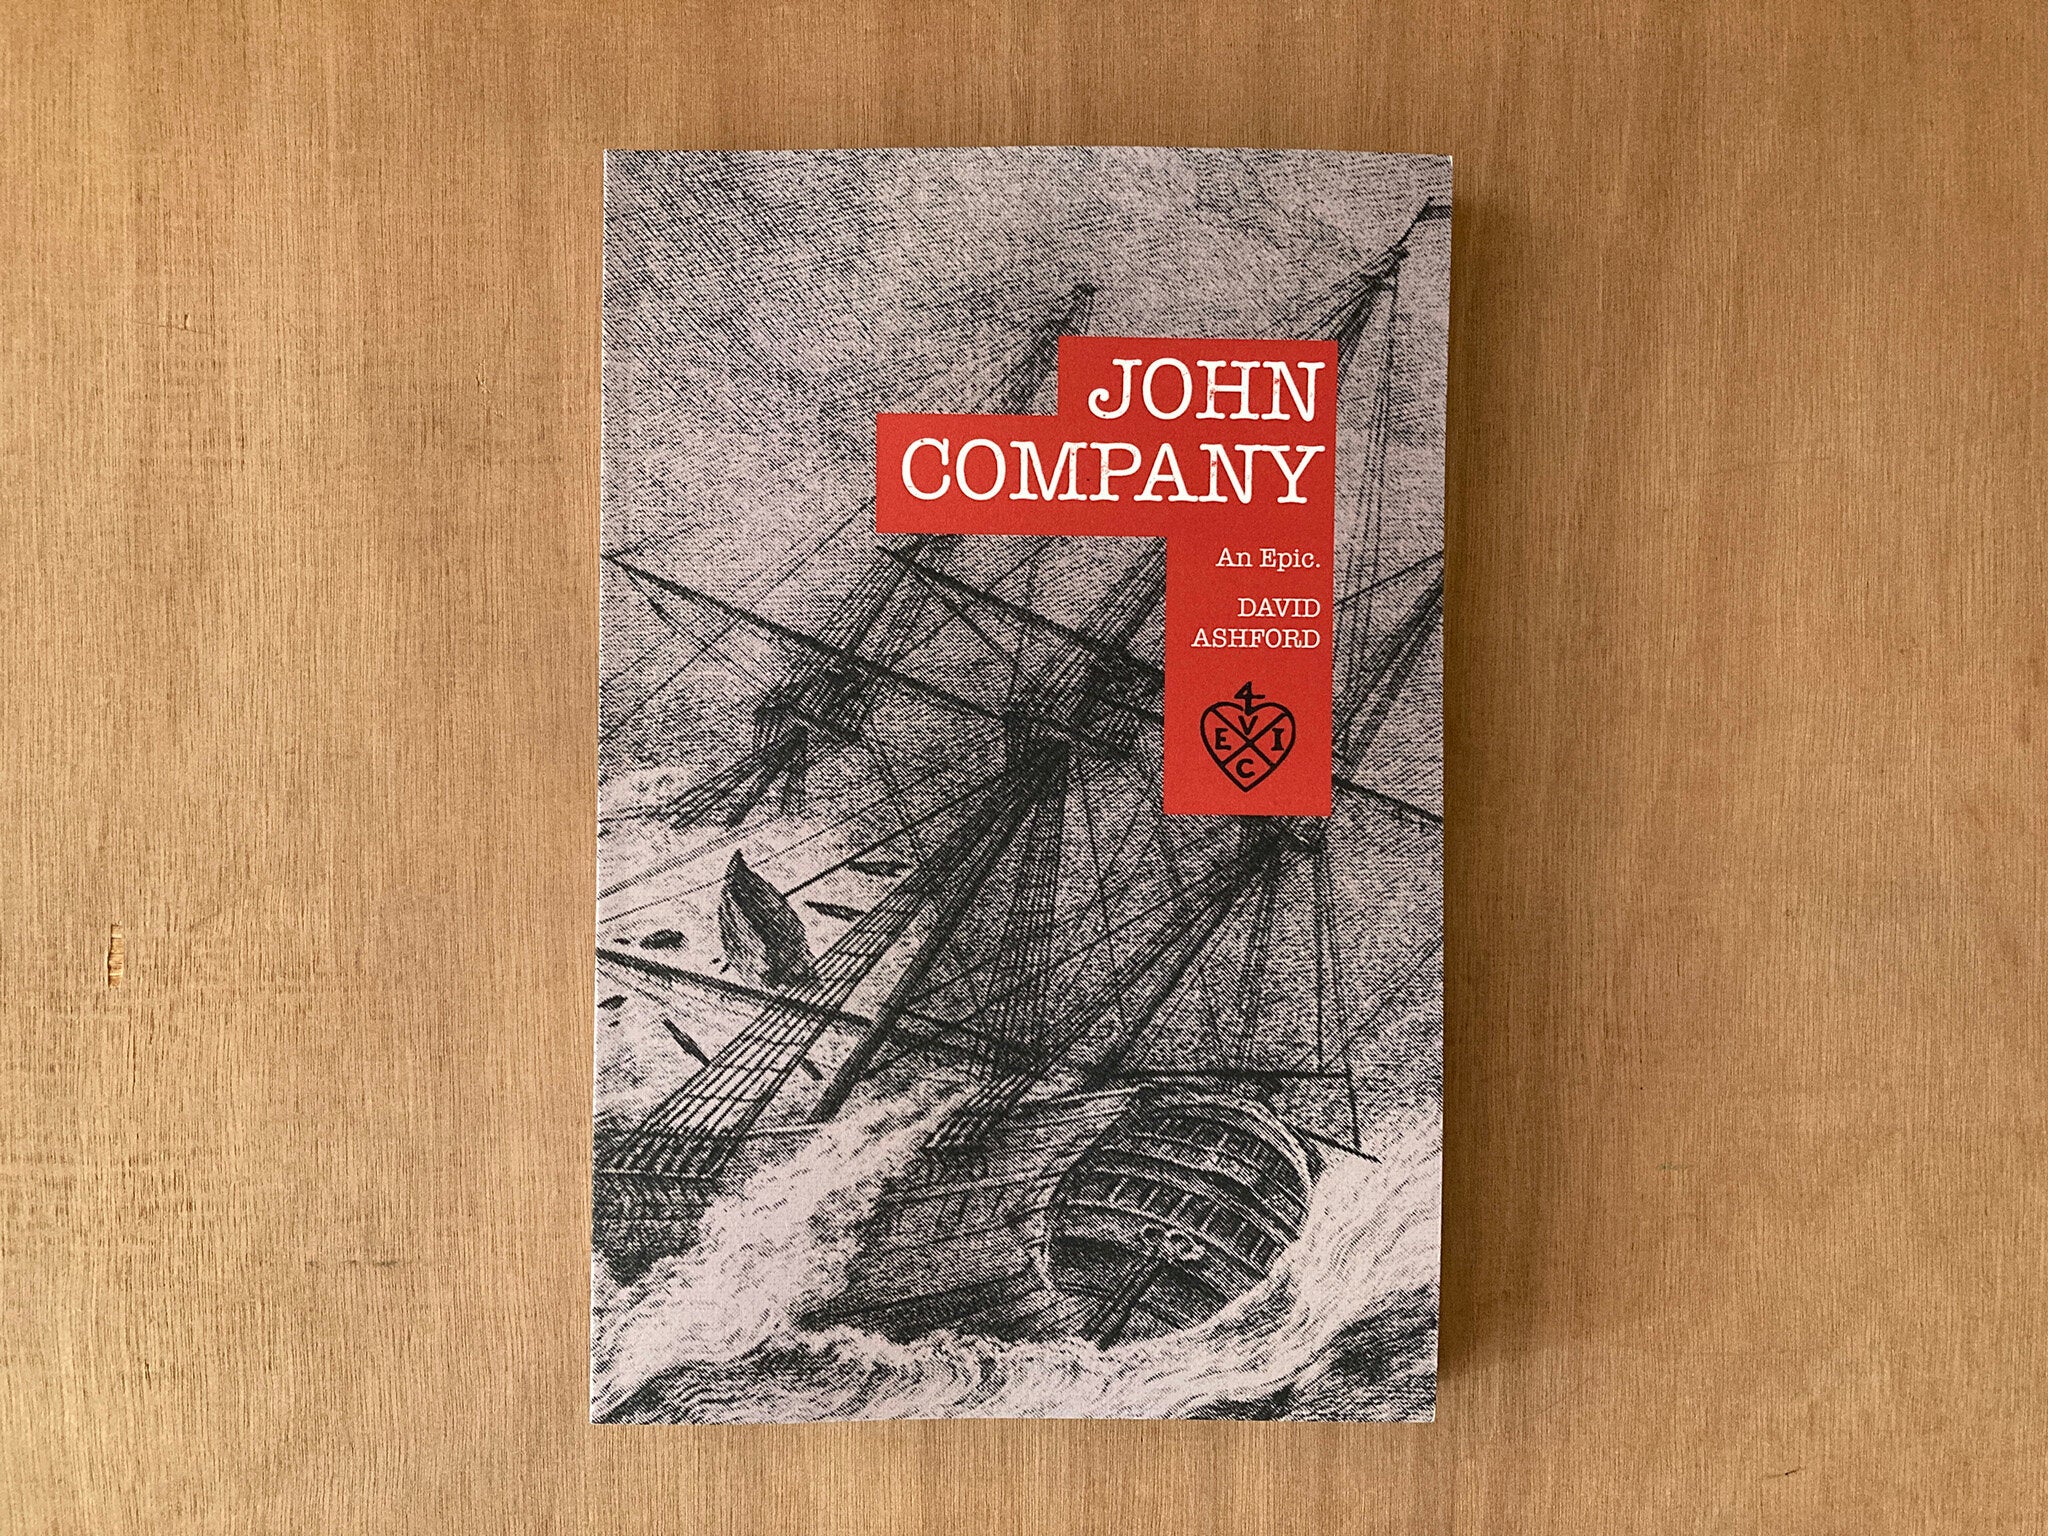 JOHN COMPANY, AN EPIC. by David Ashford